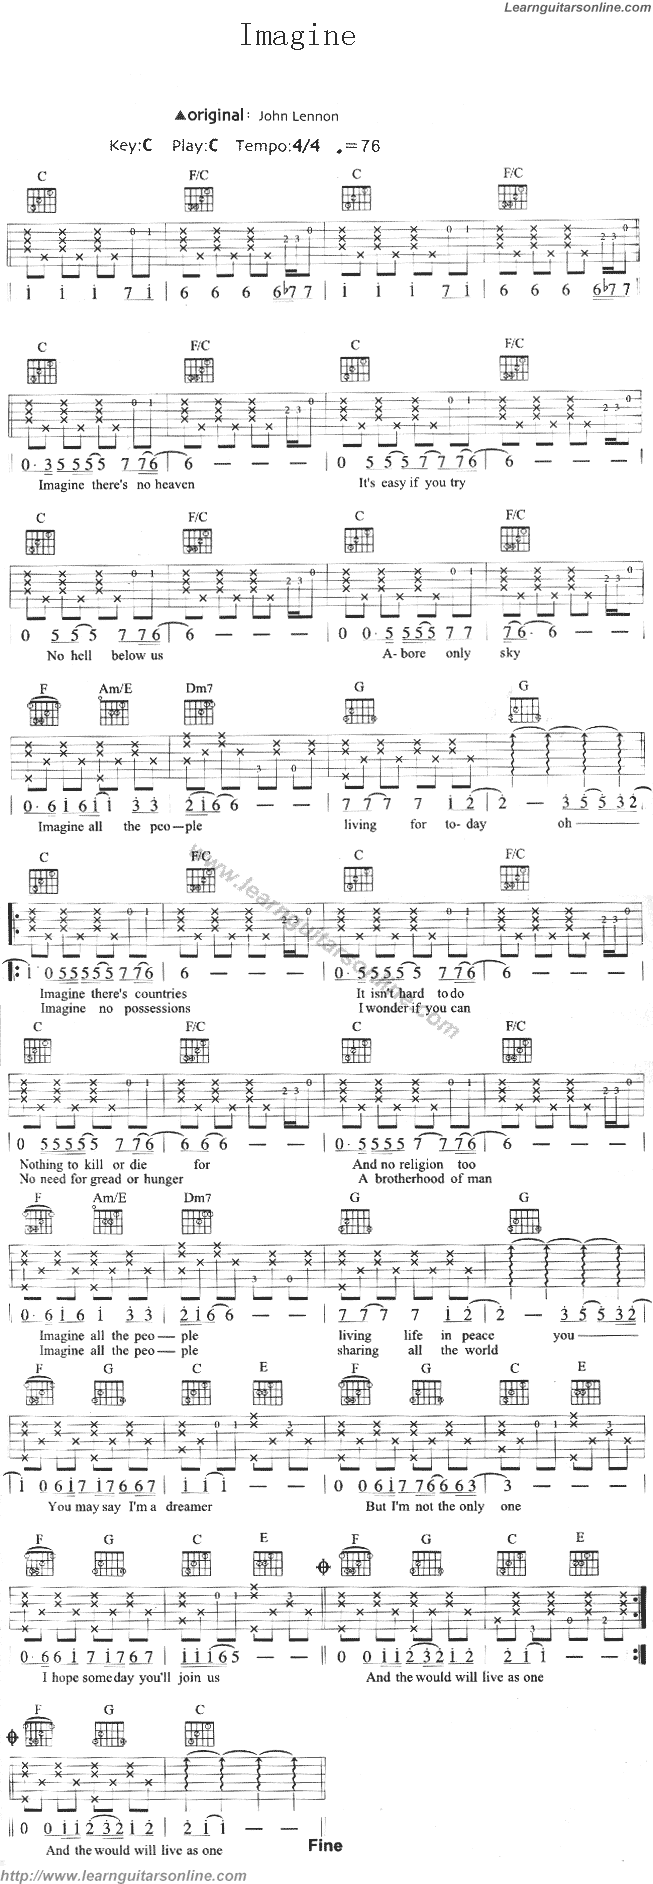 Imagine by John Lennon Guitar Tabs Chords Solo Sheet Music Free